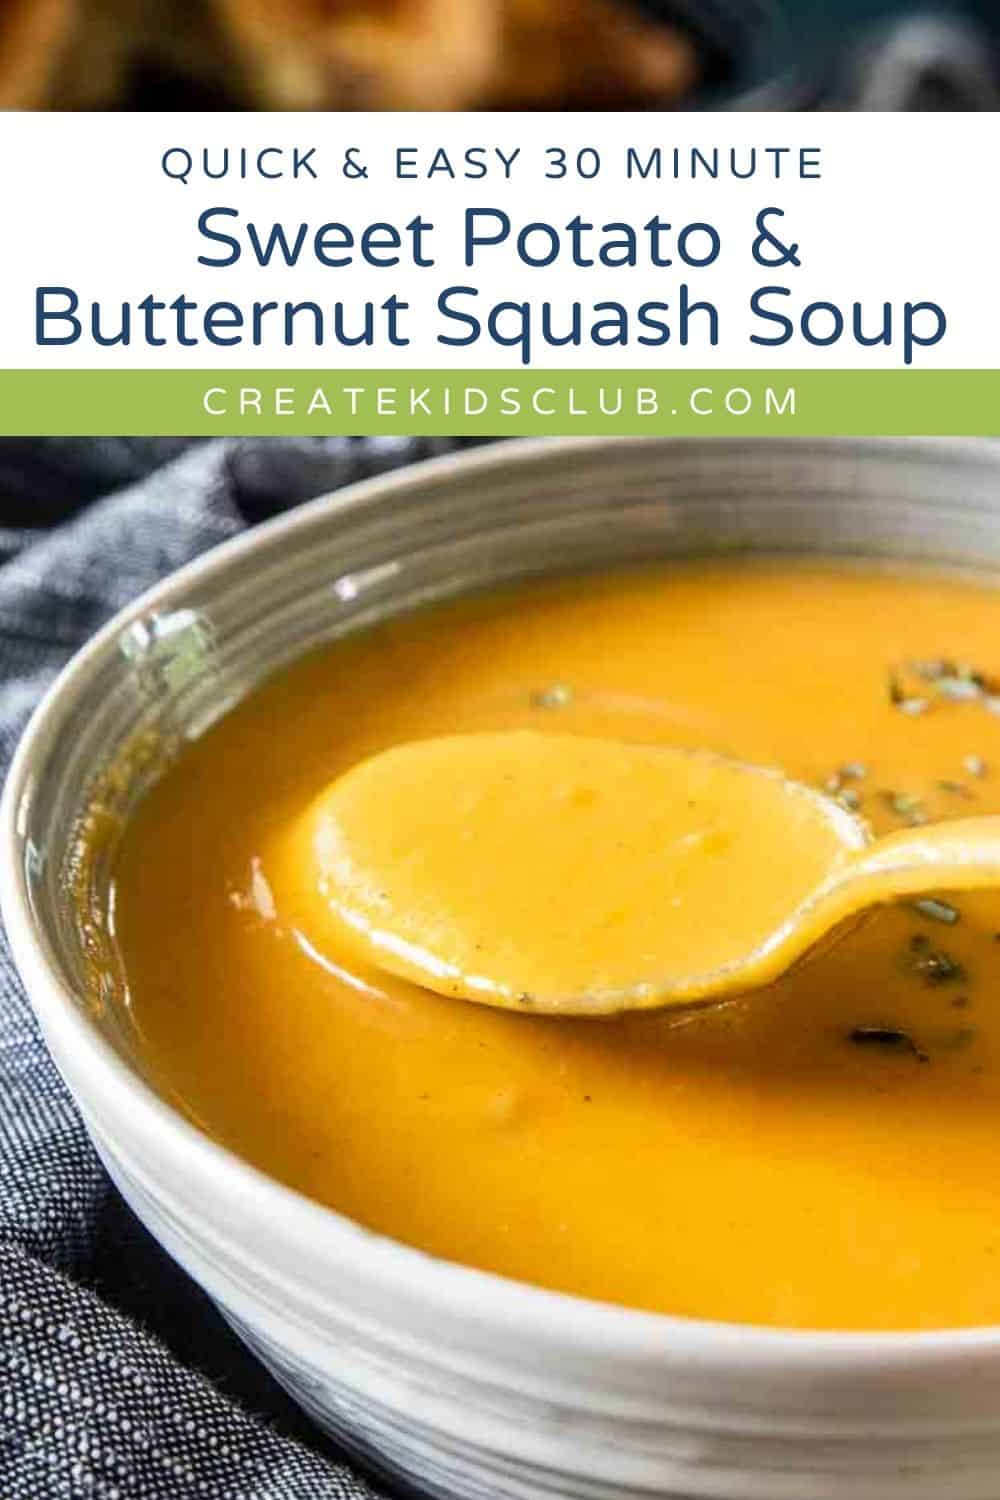 pin of butternut squash sweet potato soup